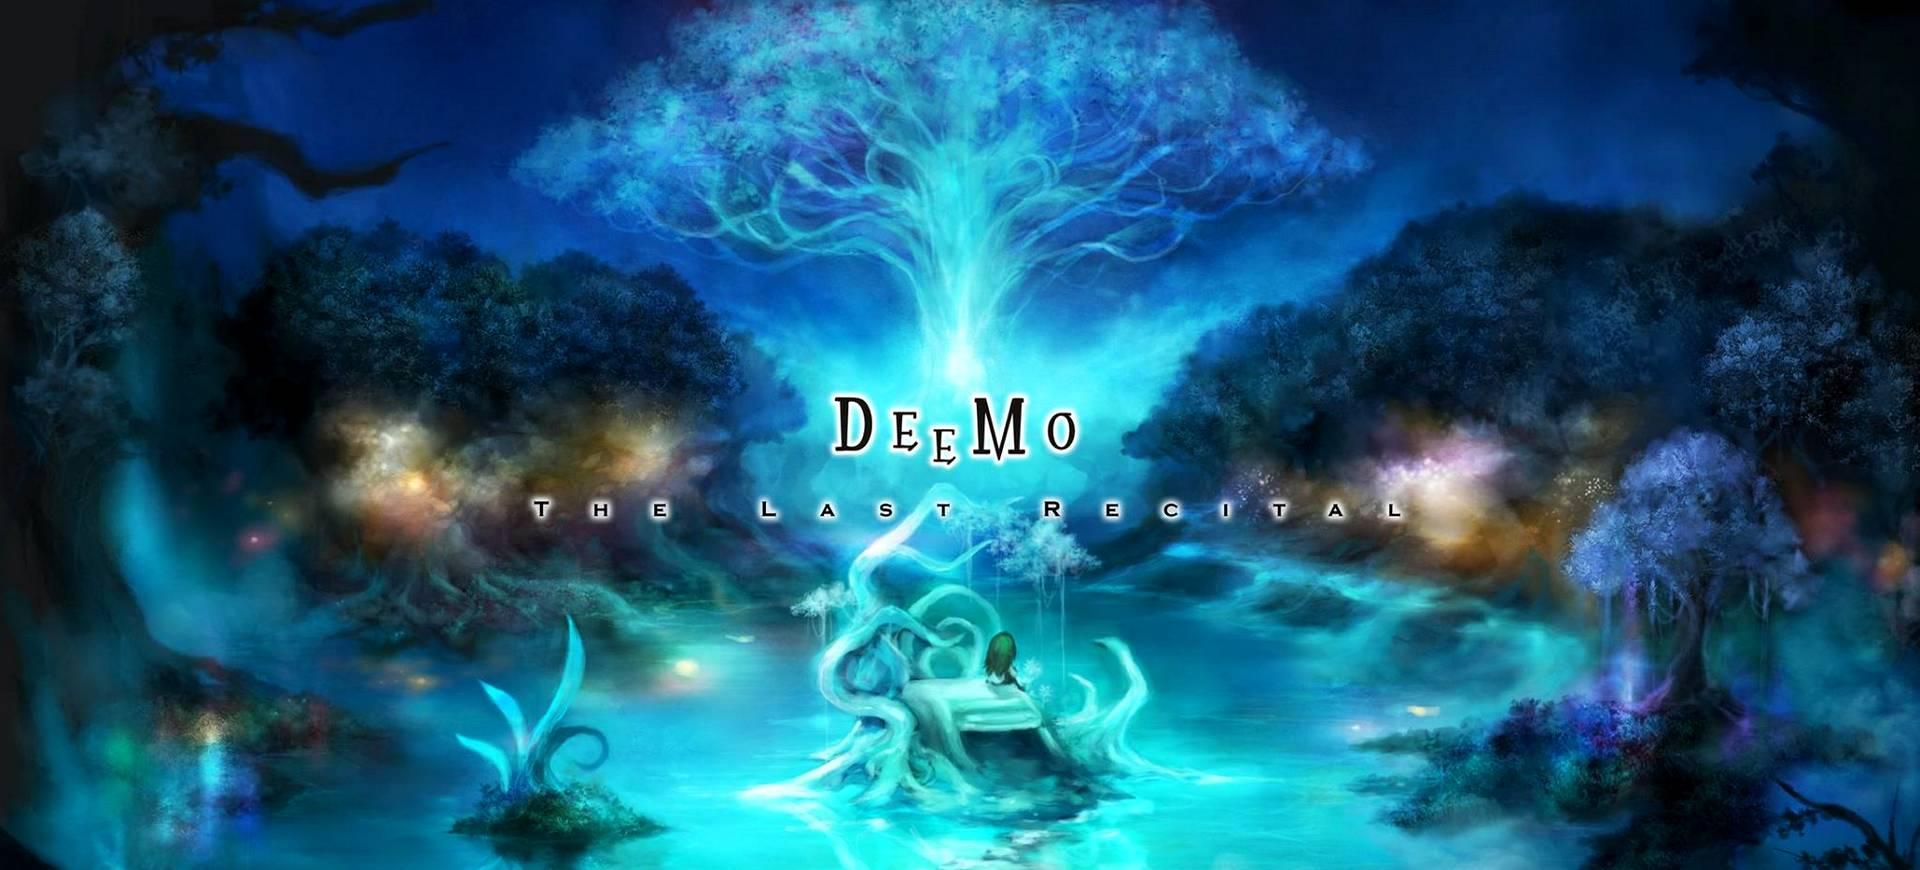 Deemo: The Last Recital - Đánh Giá Game